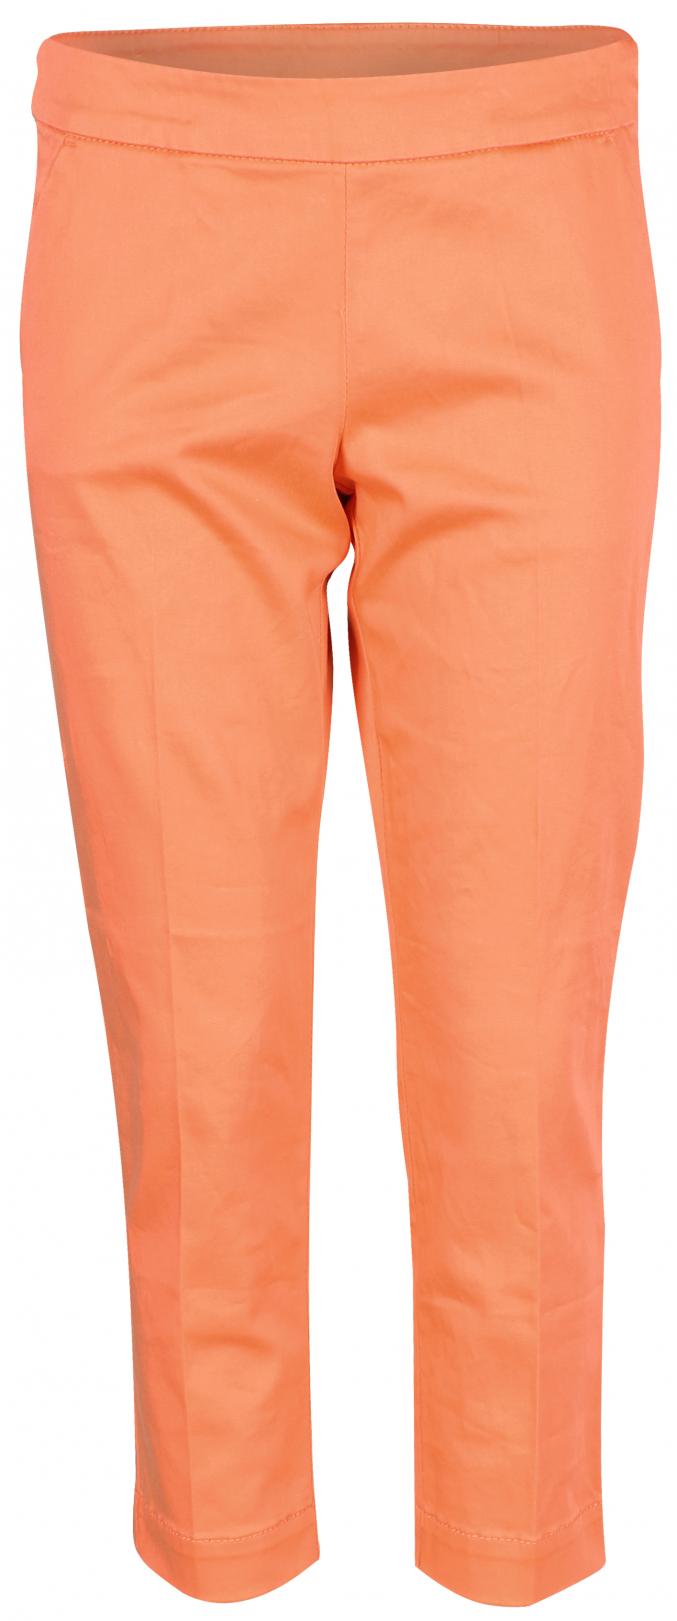 Pantalon orange- JBC - 29,90€